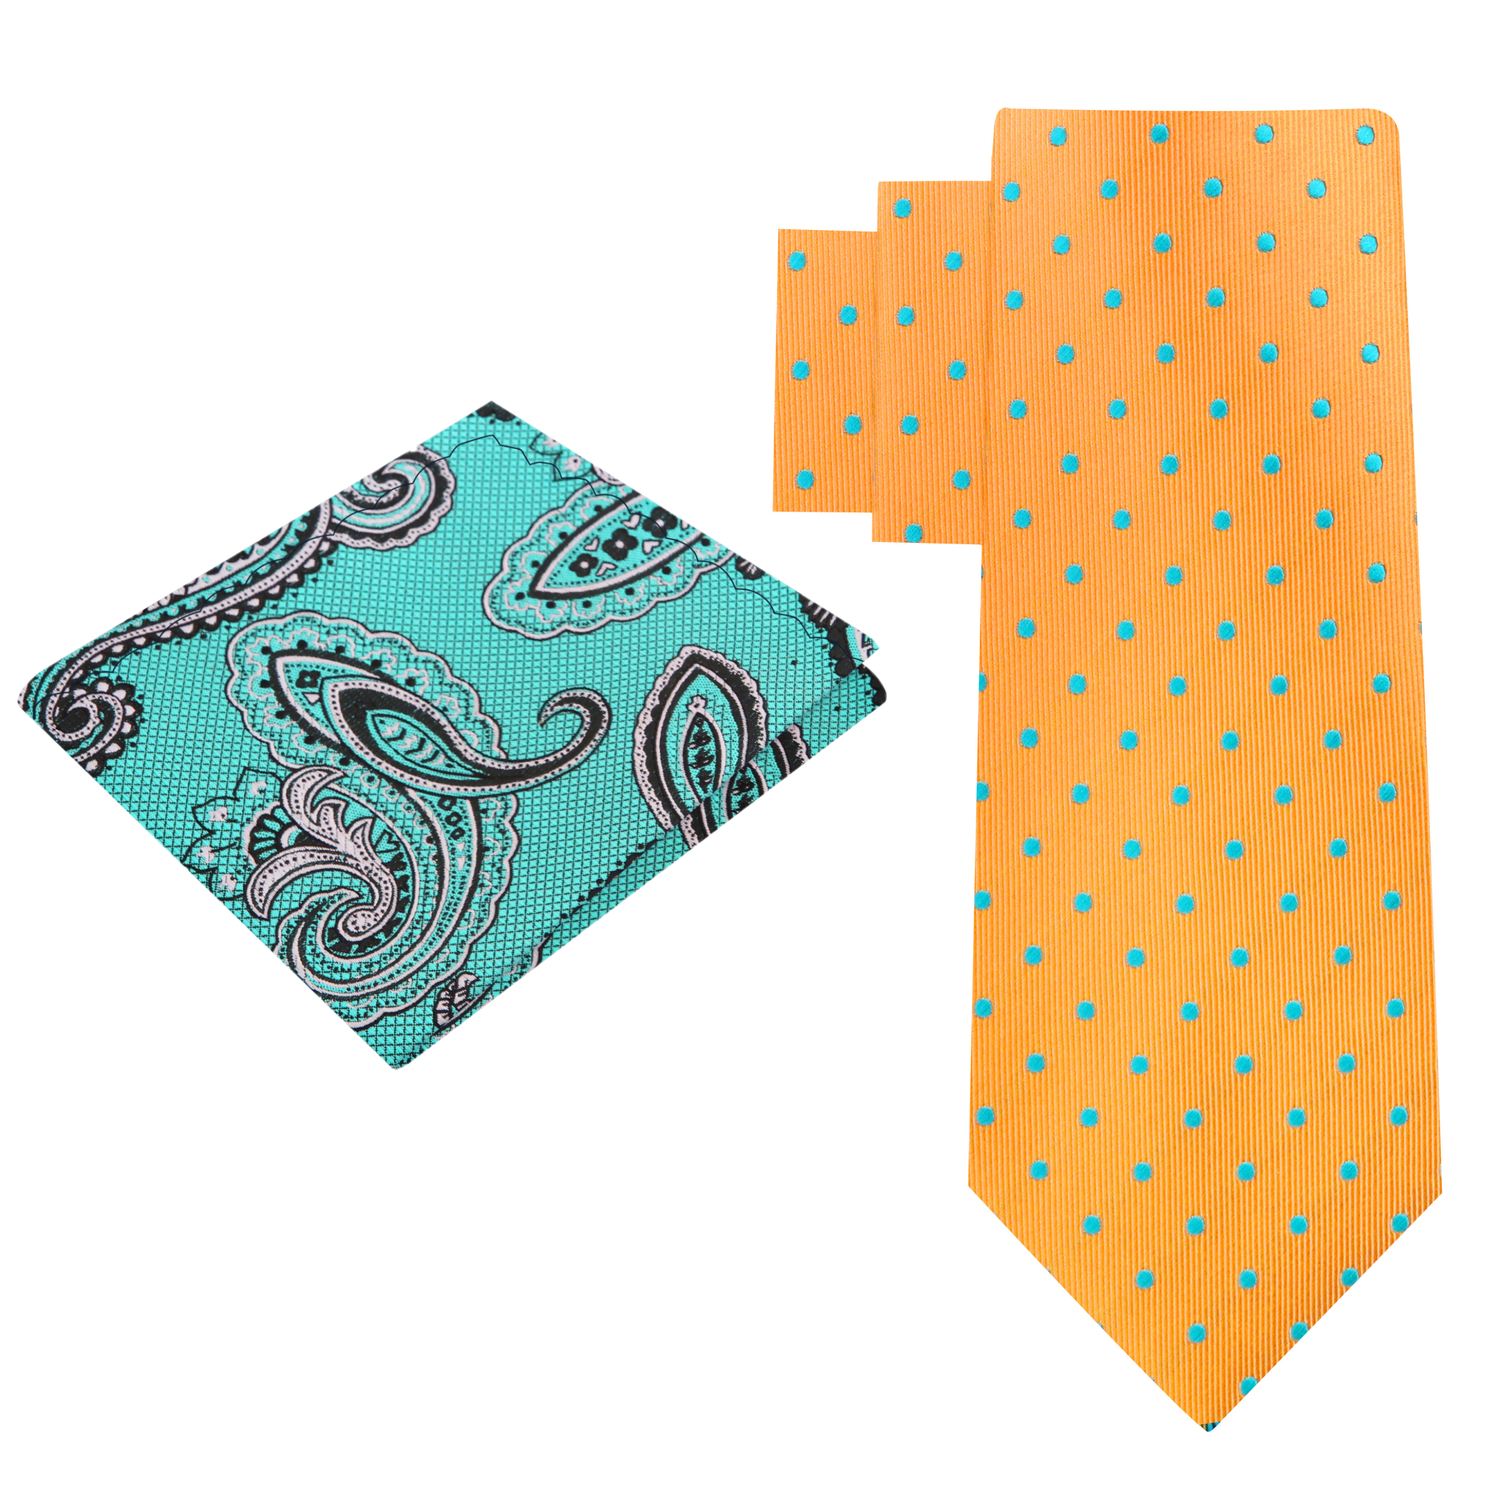 Alt View: Orange with Aqua Dots Necktie and Aqua Blue Paisley Pocket Square